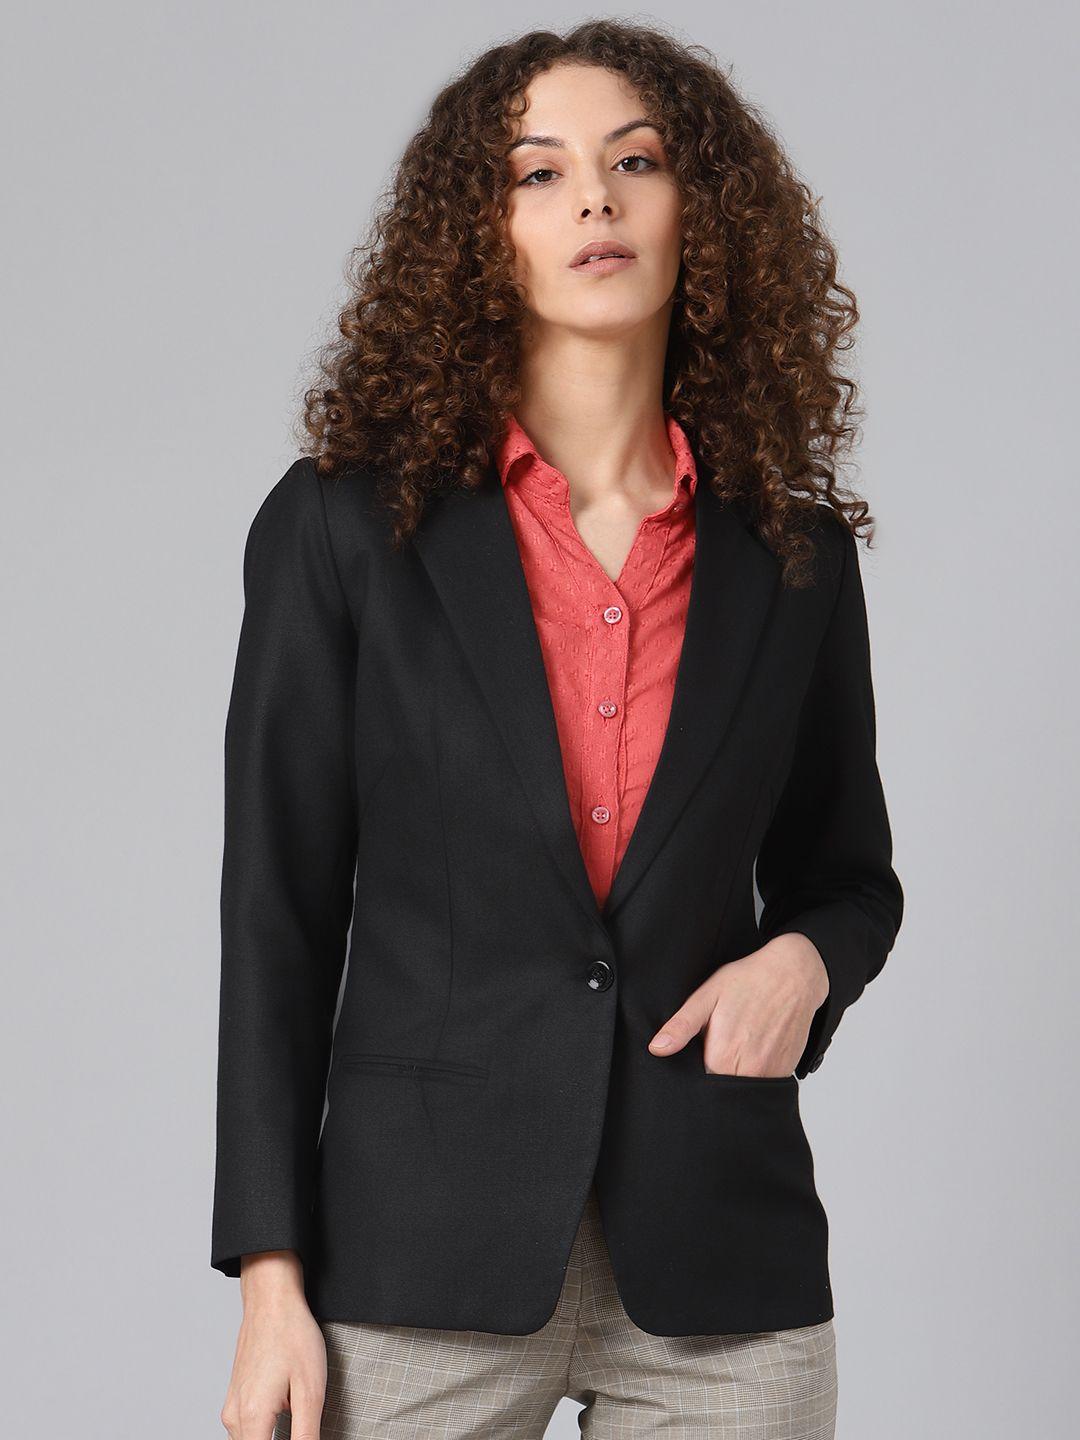 shaftesbury-london-women-black-solid-formal-blazer